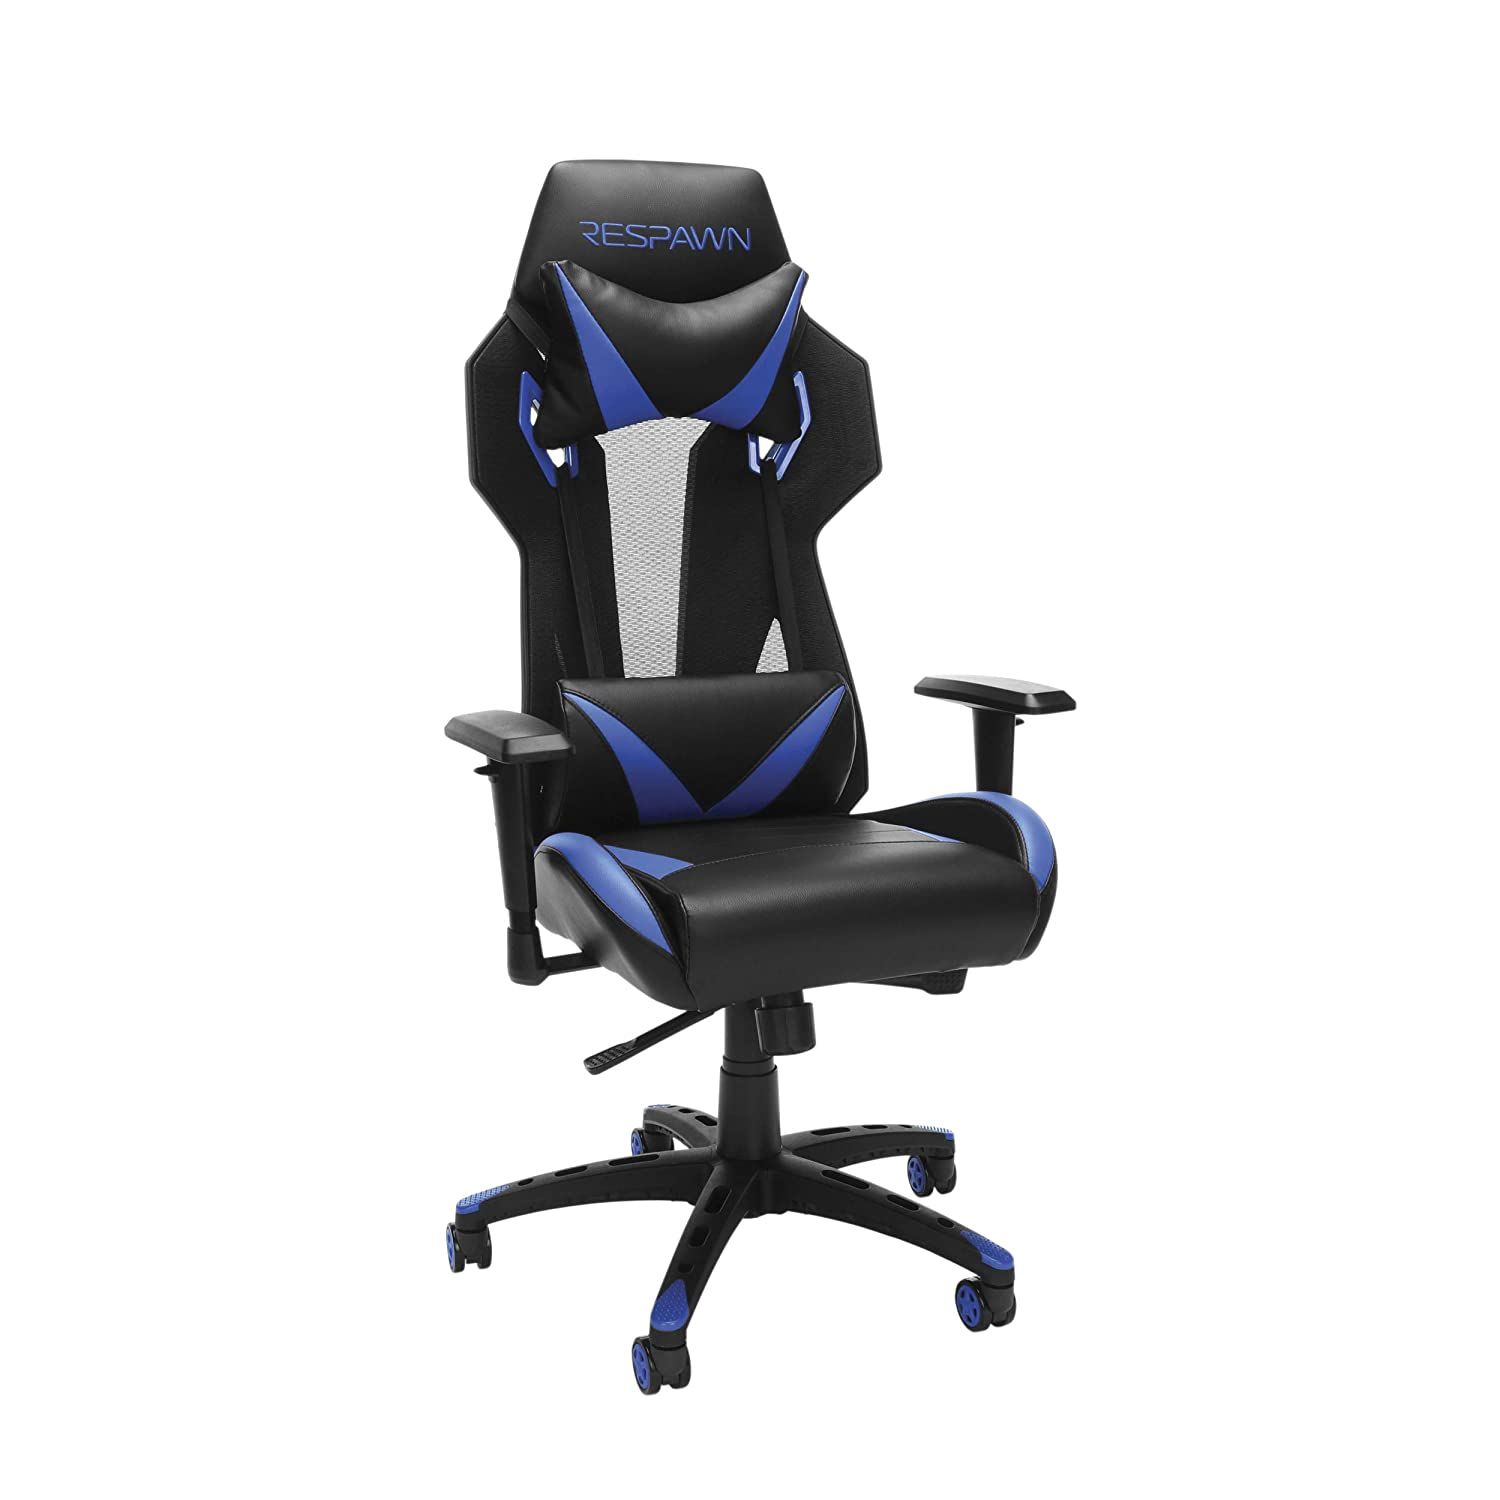 Respawn 205 Gaming Chair